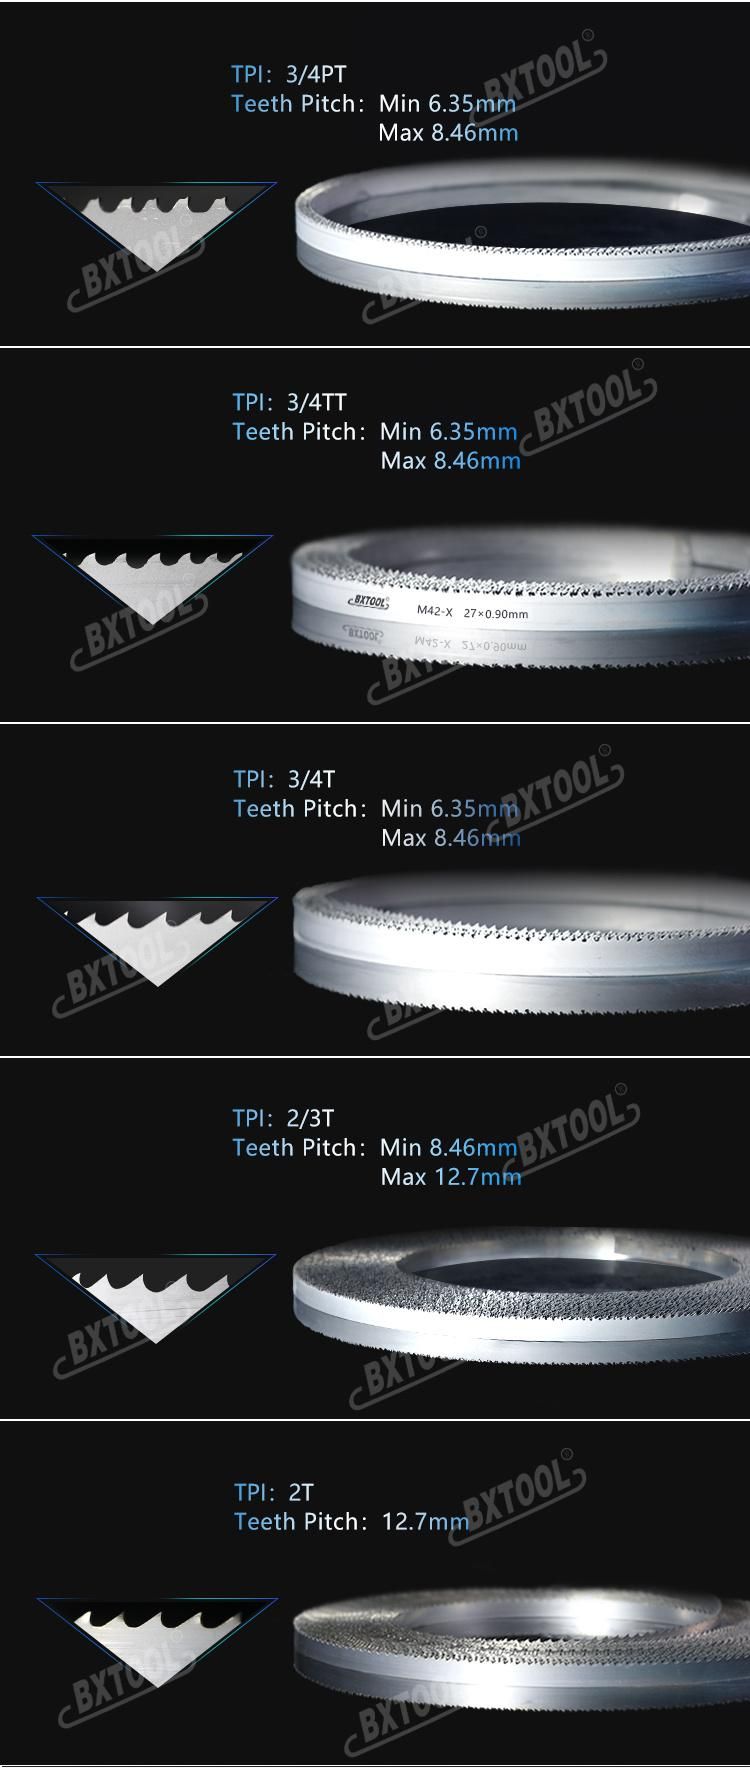 M42 HSS Bimetal Bandsaw Blades Material From Germany Hugo Good Quality